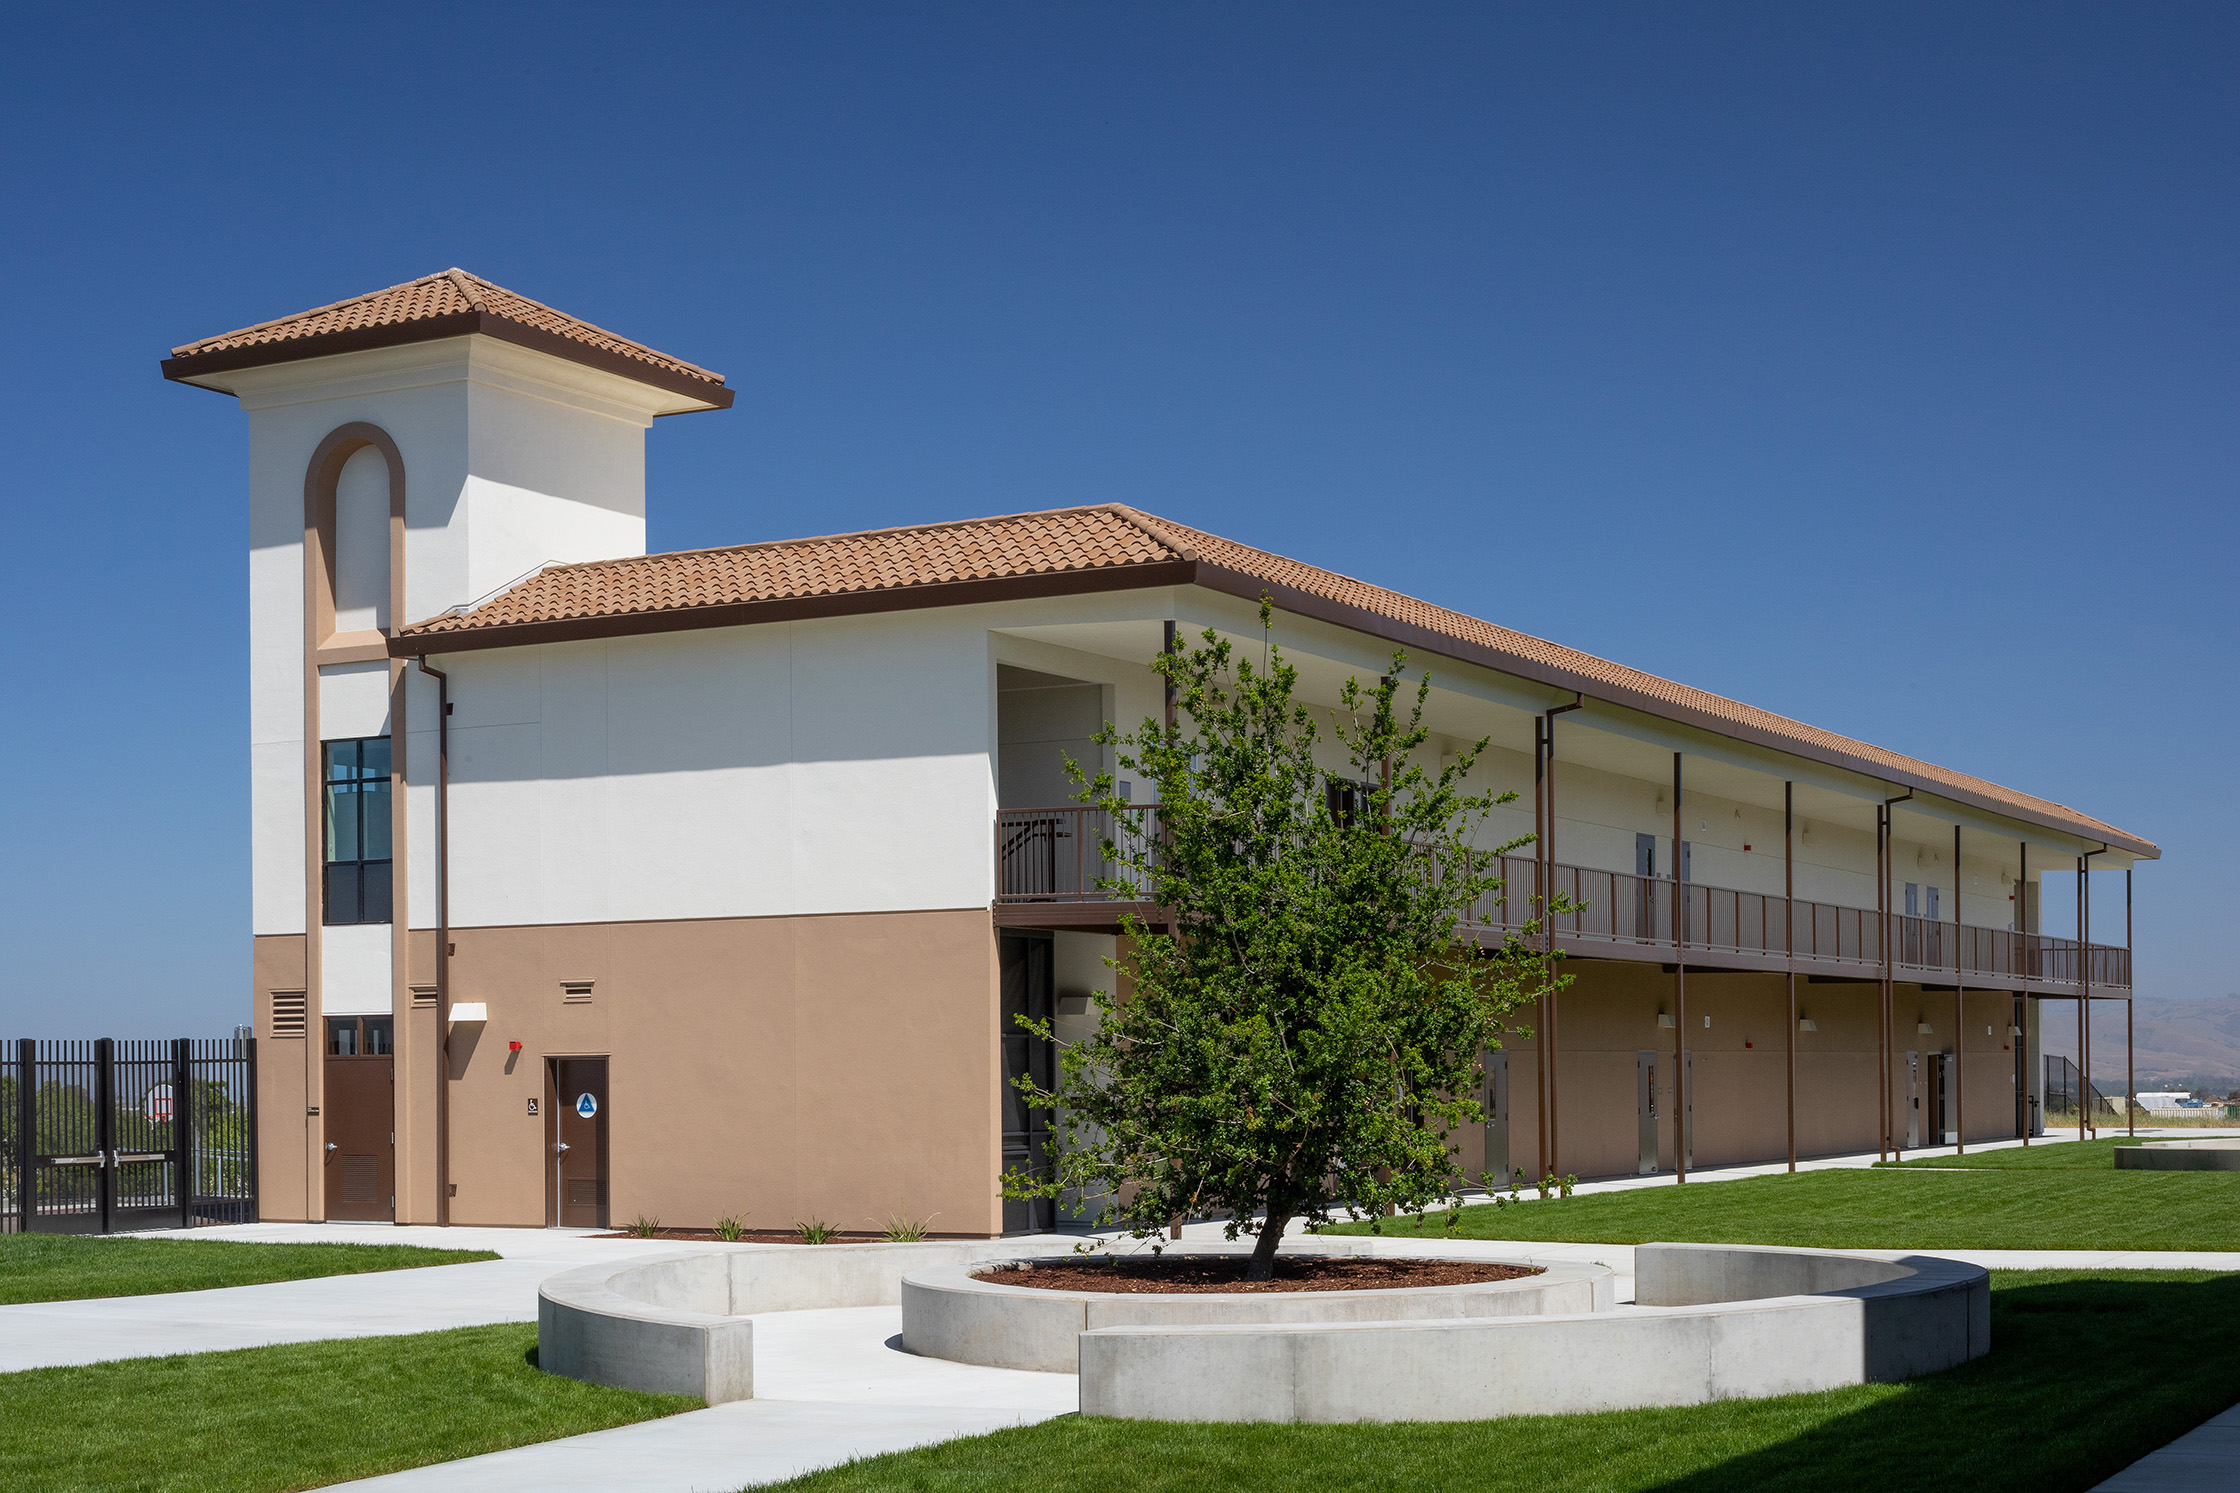 Rancho Santana School